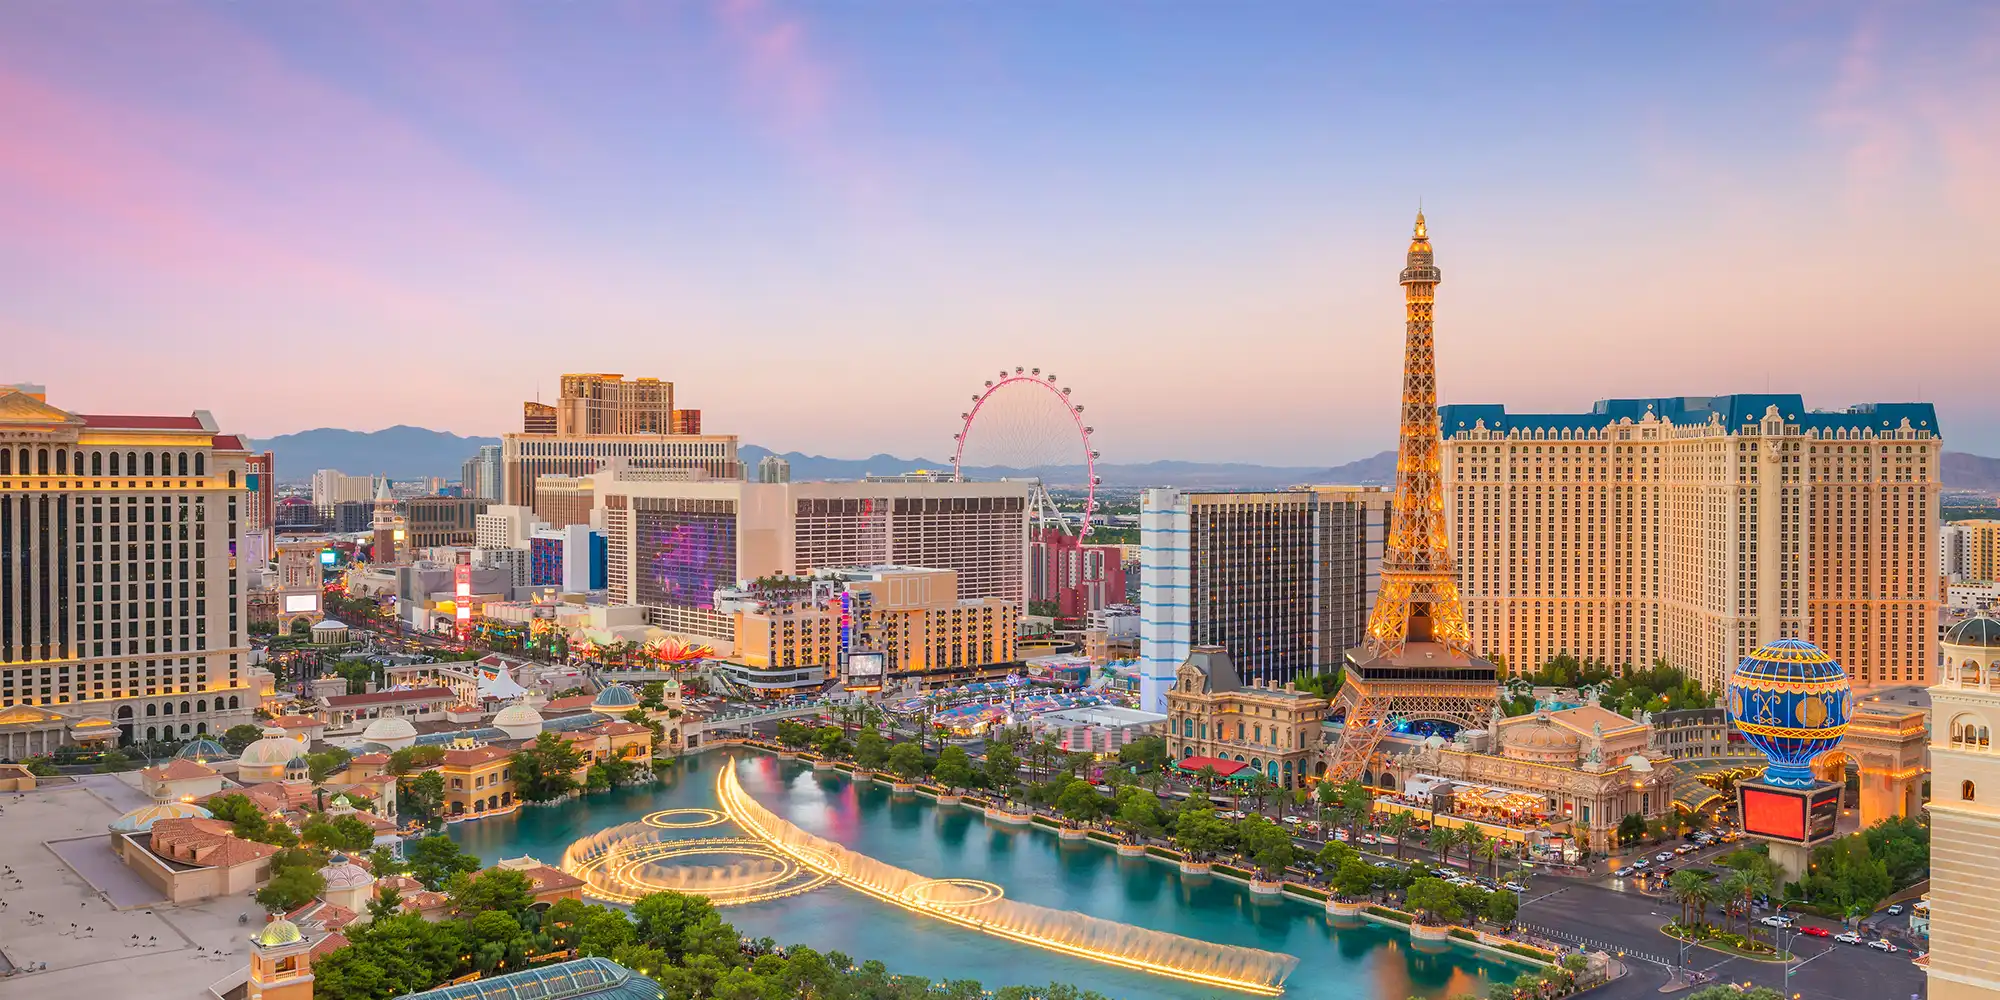 Scenic view of Las Vegas location